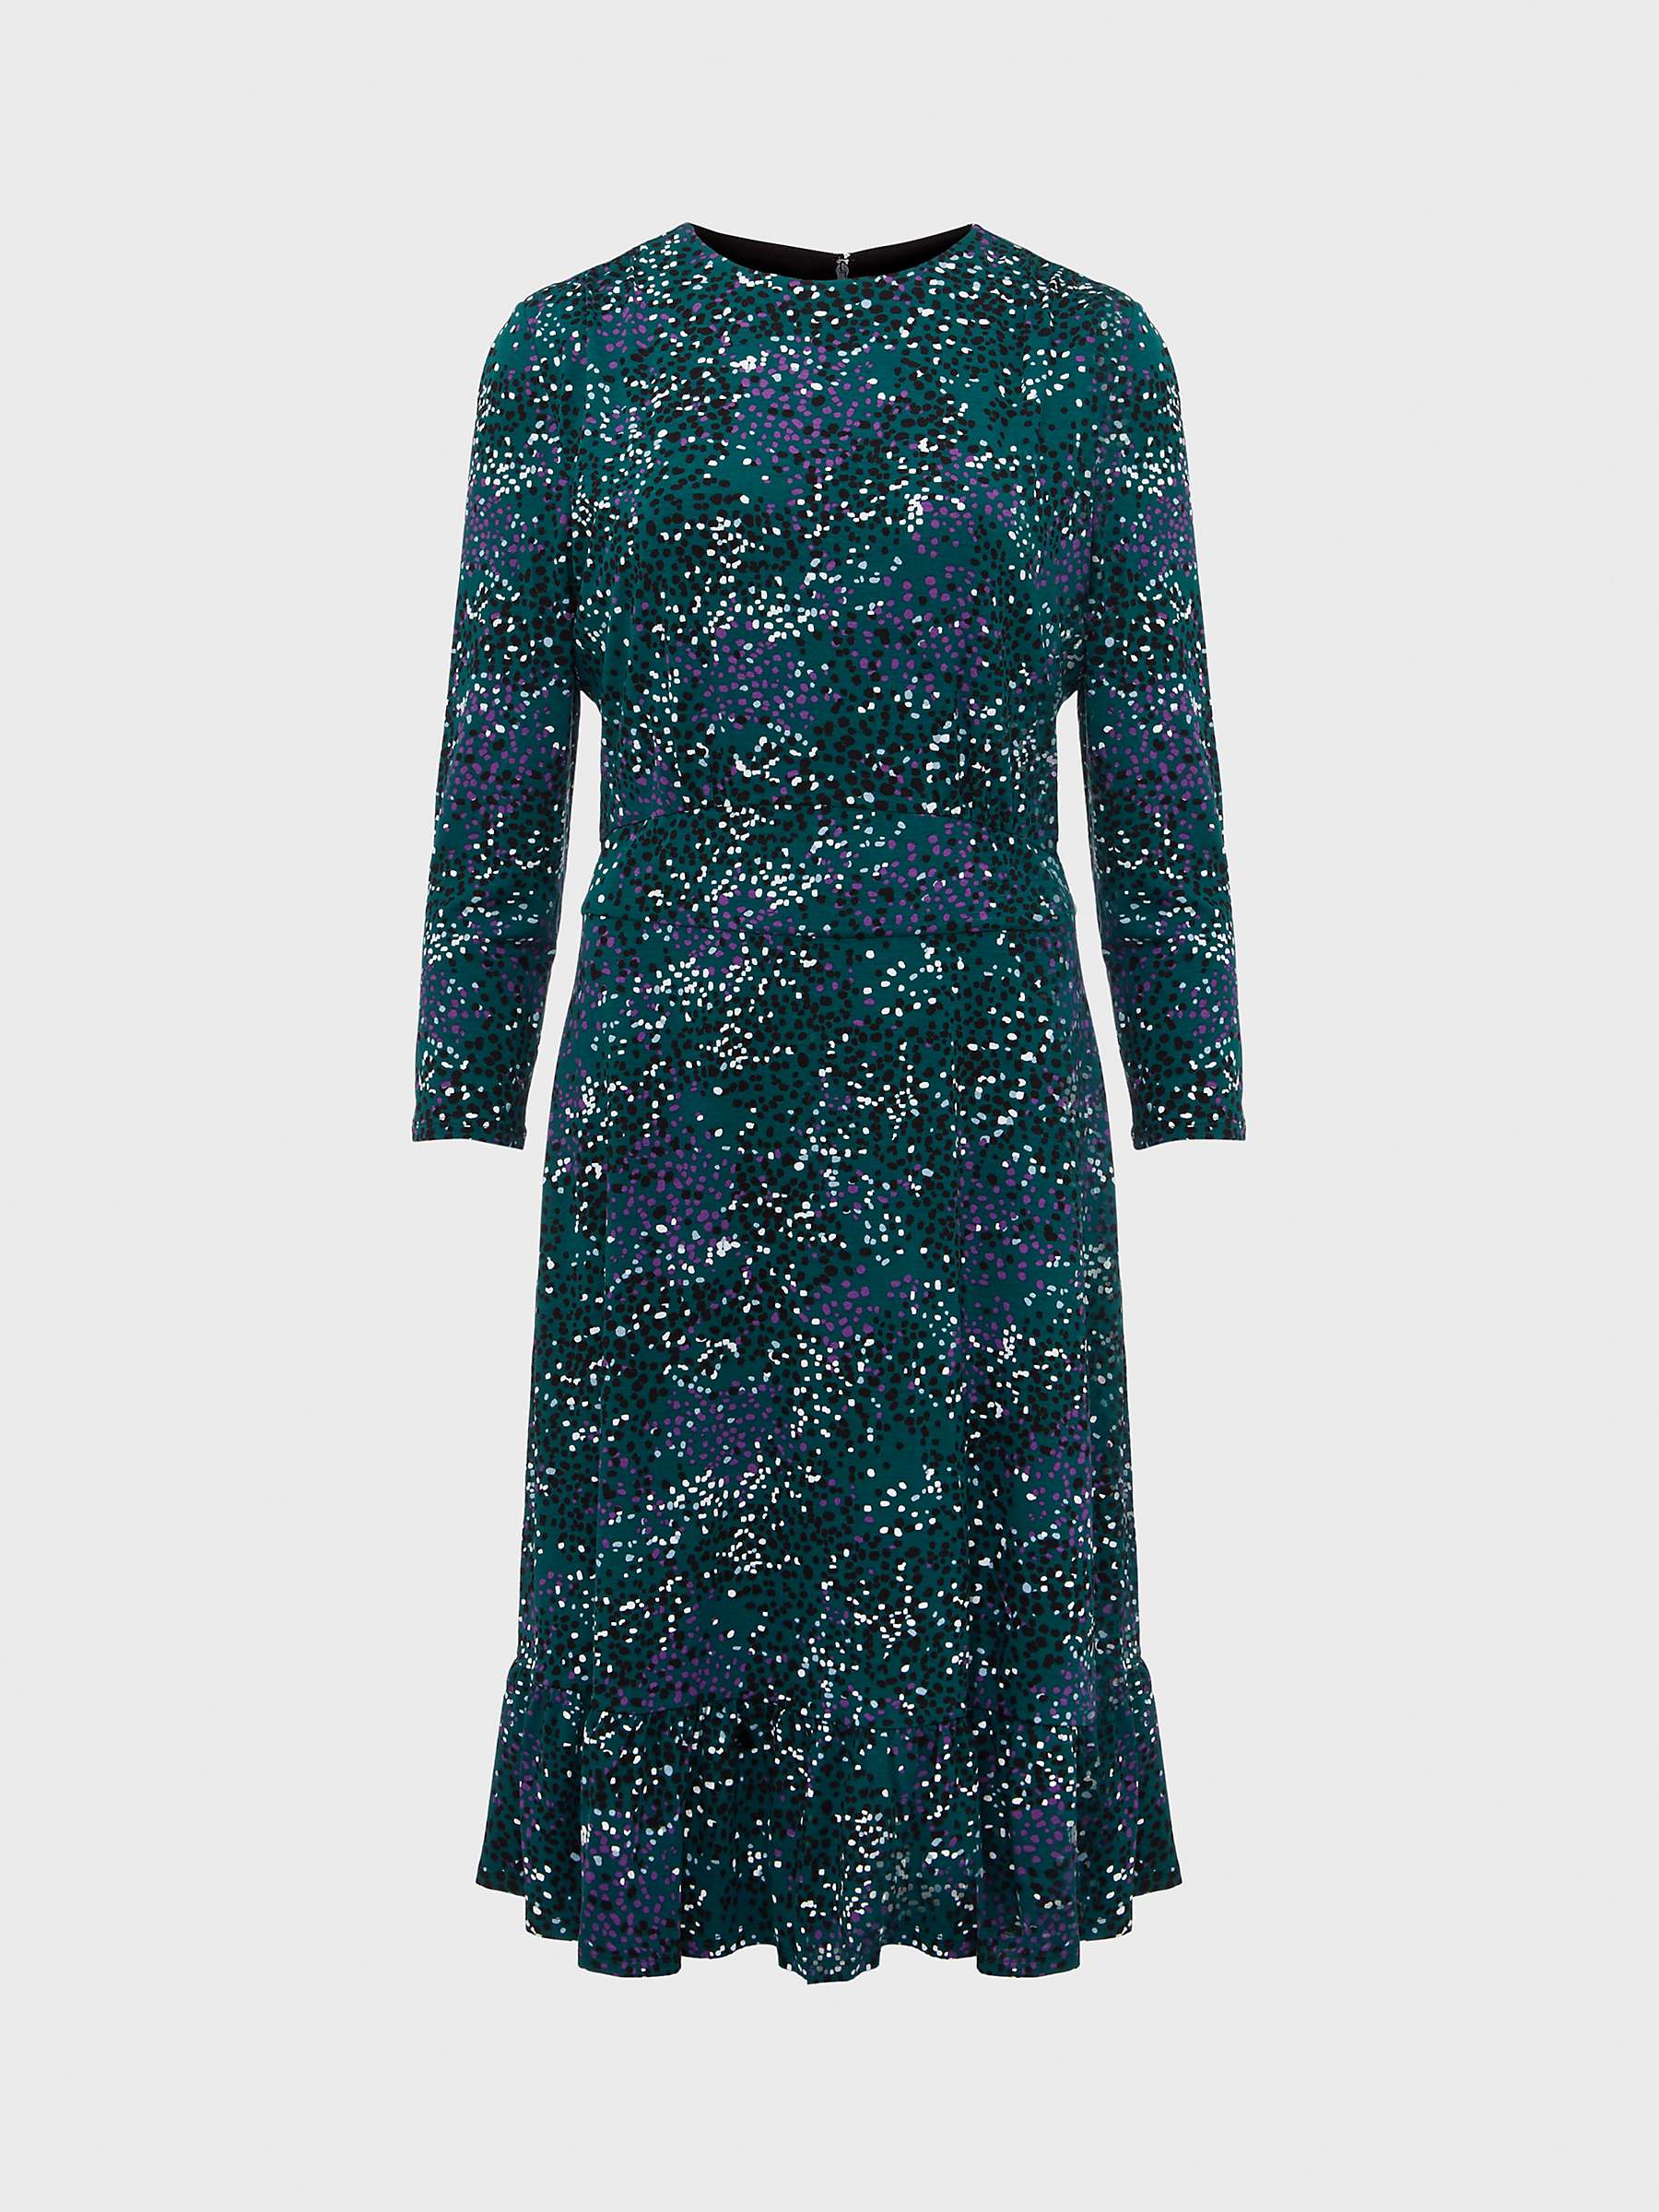 Buy Hobbs Ami frill Jersey Dress, Deep Teal/Multi Online at johnlewis.com